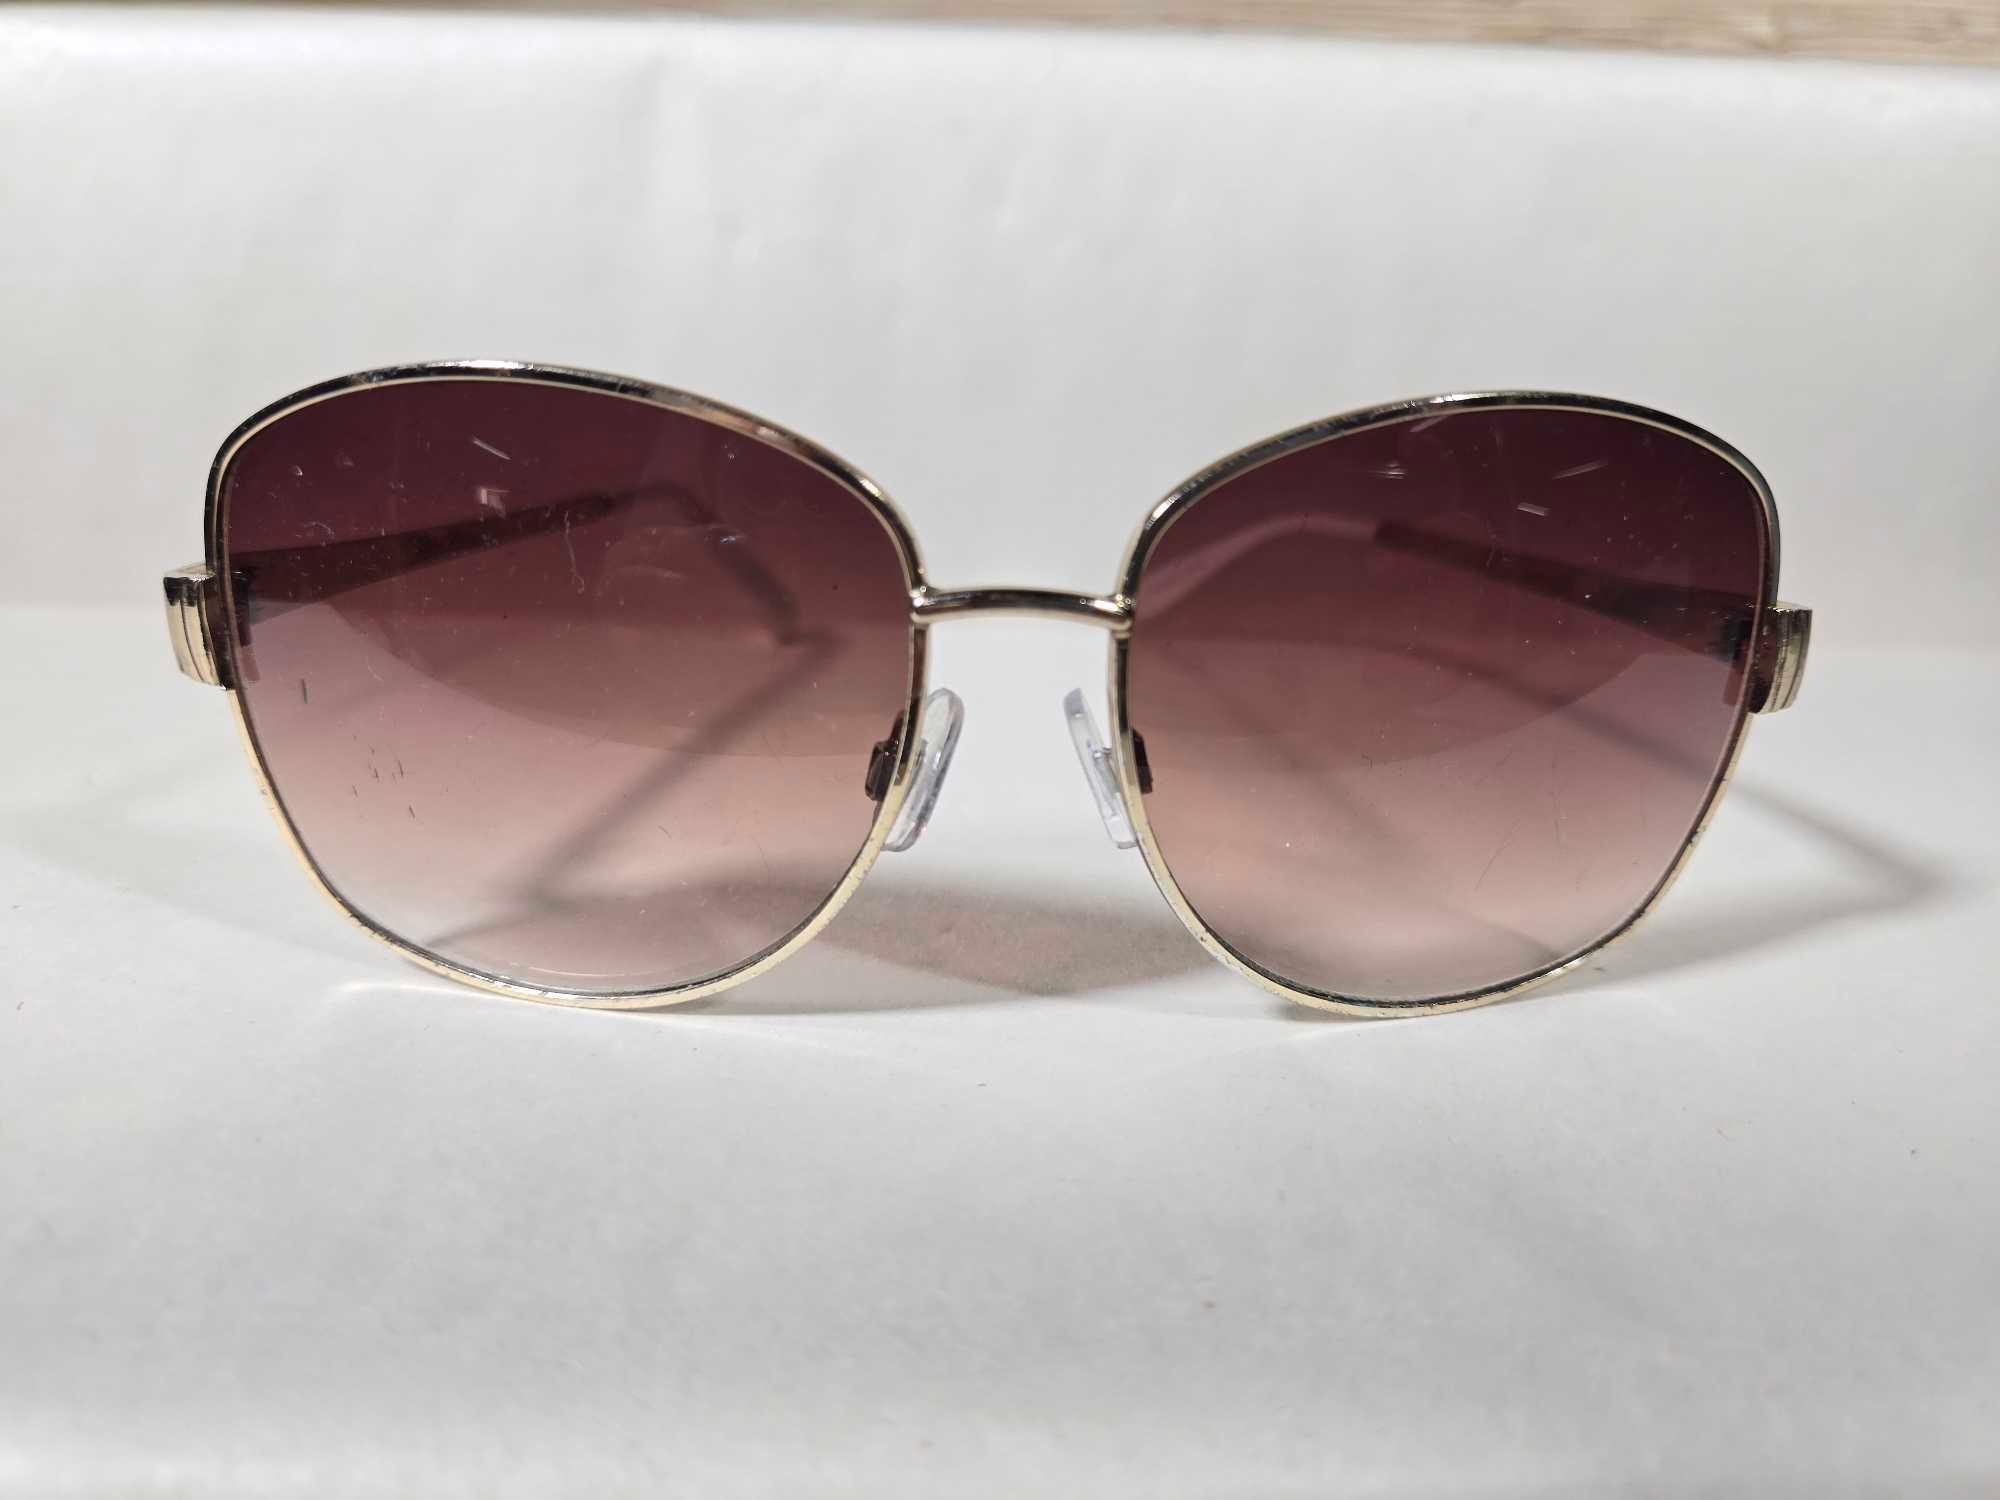 4 Pair of Vintage Women's Sunglasses incl. Oleg Cassini & More